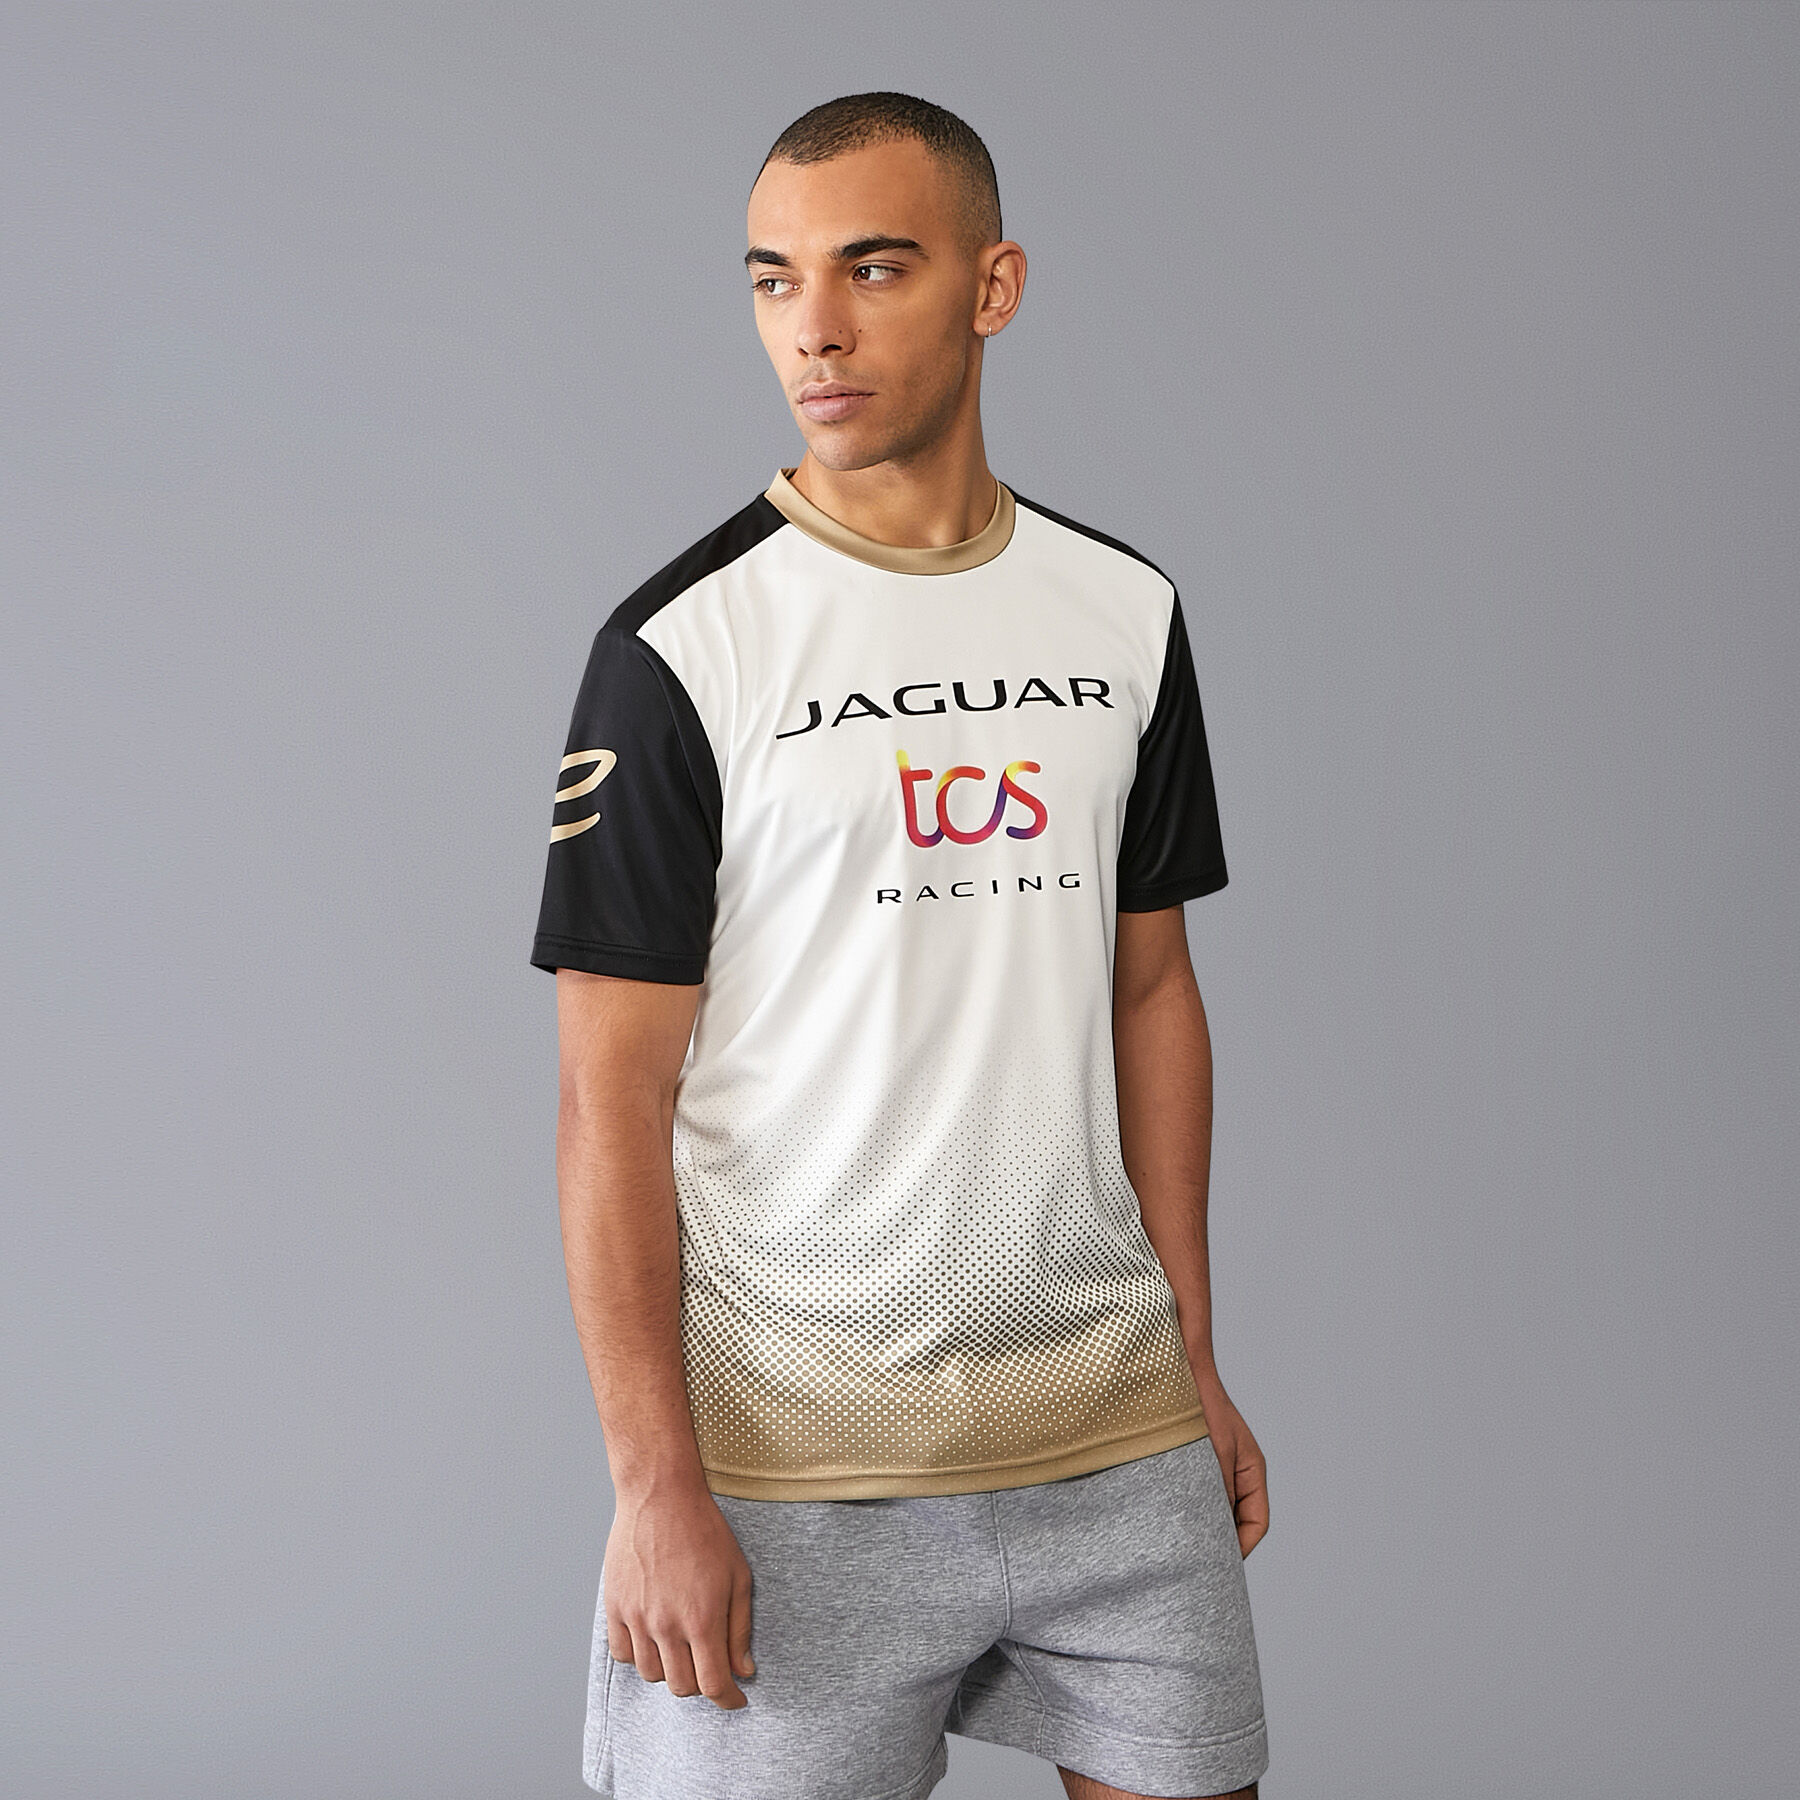 Season 10 Championship T-shirt - Jaguar TCS Racing | Official 